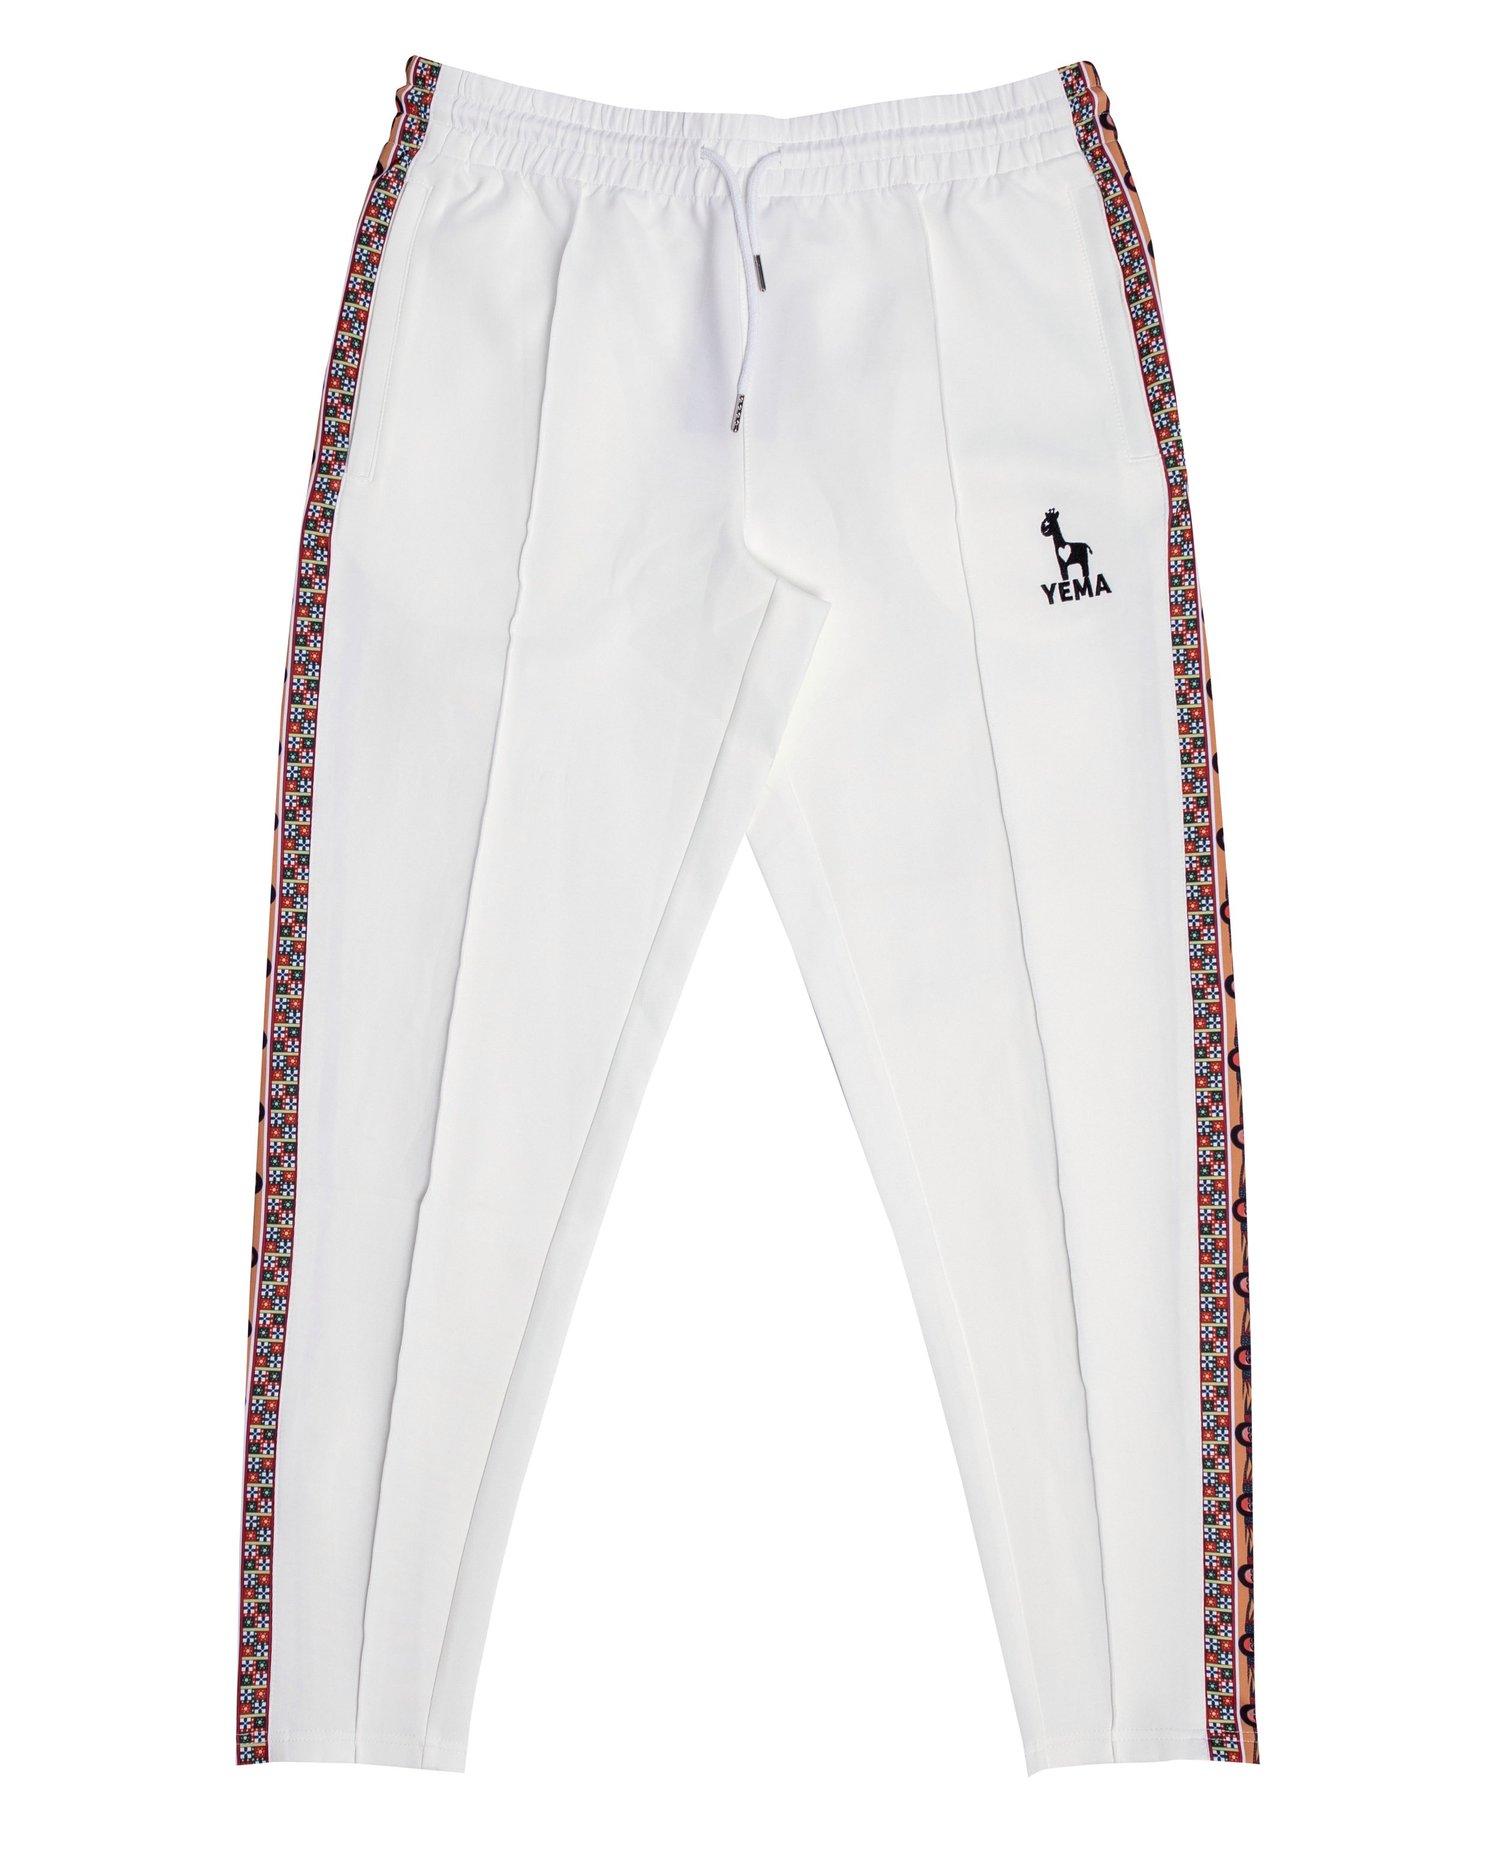 Athletic White Jogger Pants